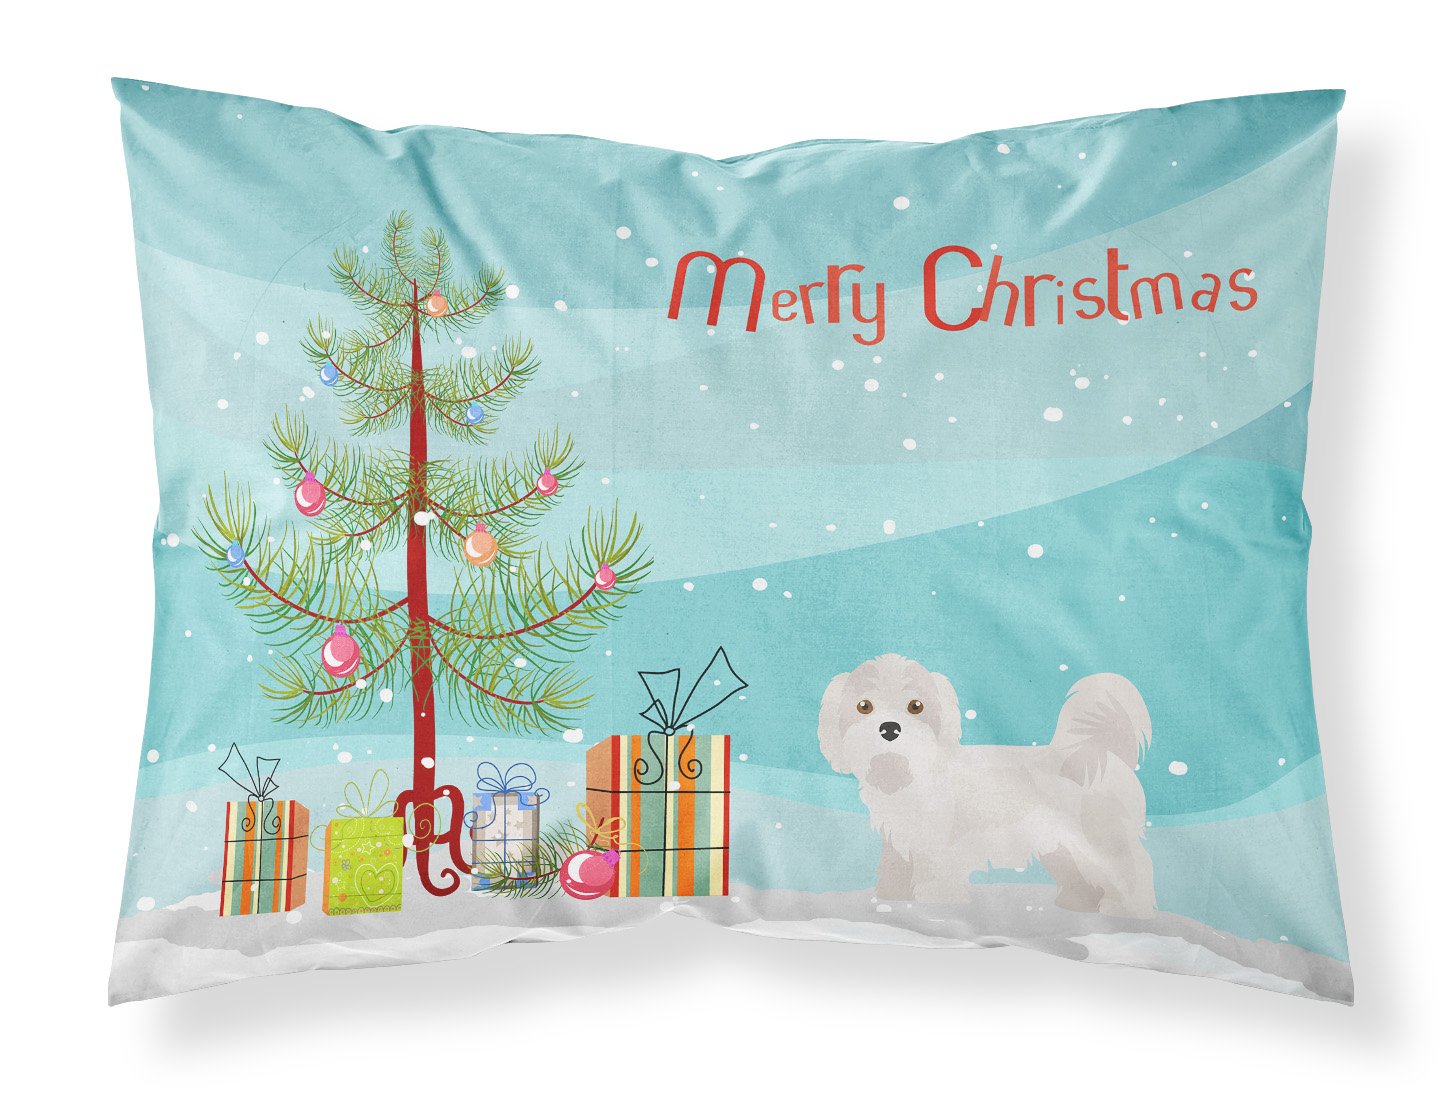 Kyi-Leo Christmas Tree Fabric Standard Pillowcase CK3467PILLOWCASE by Caroline's Treasures